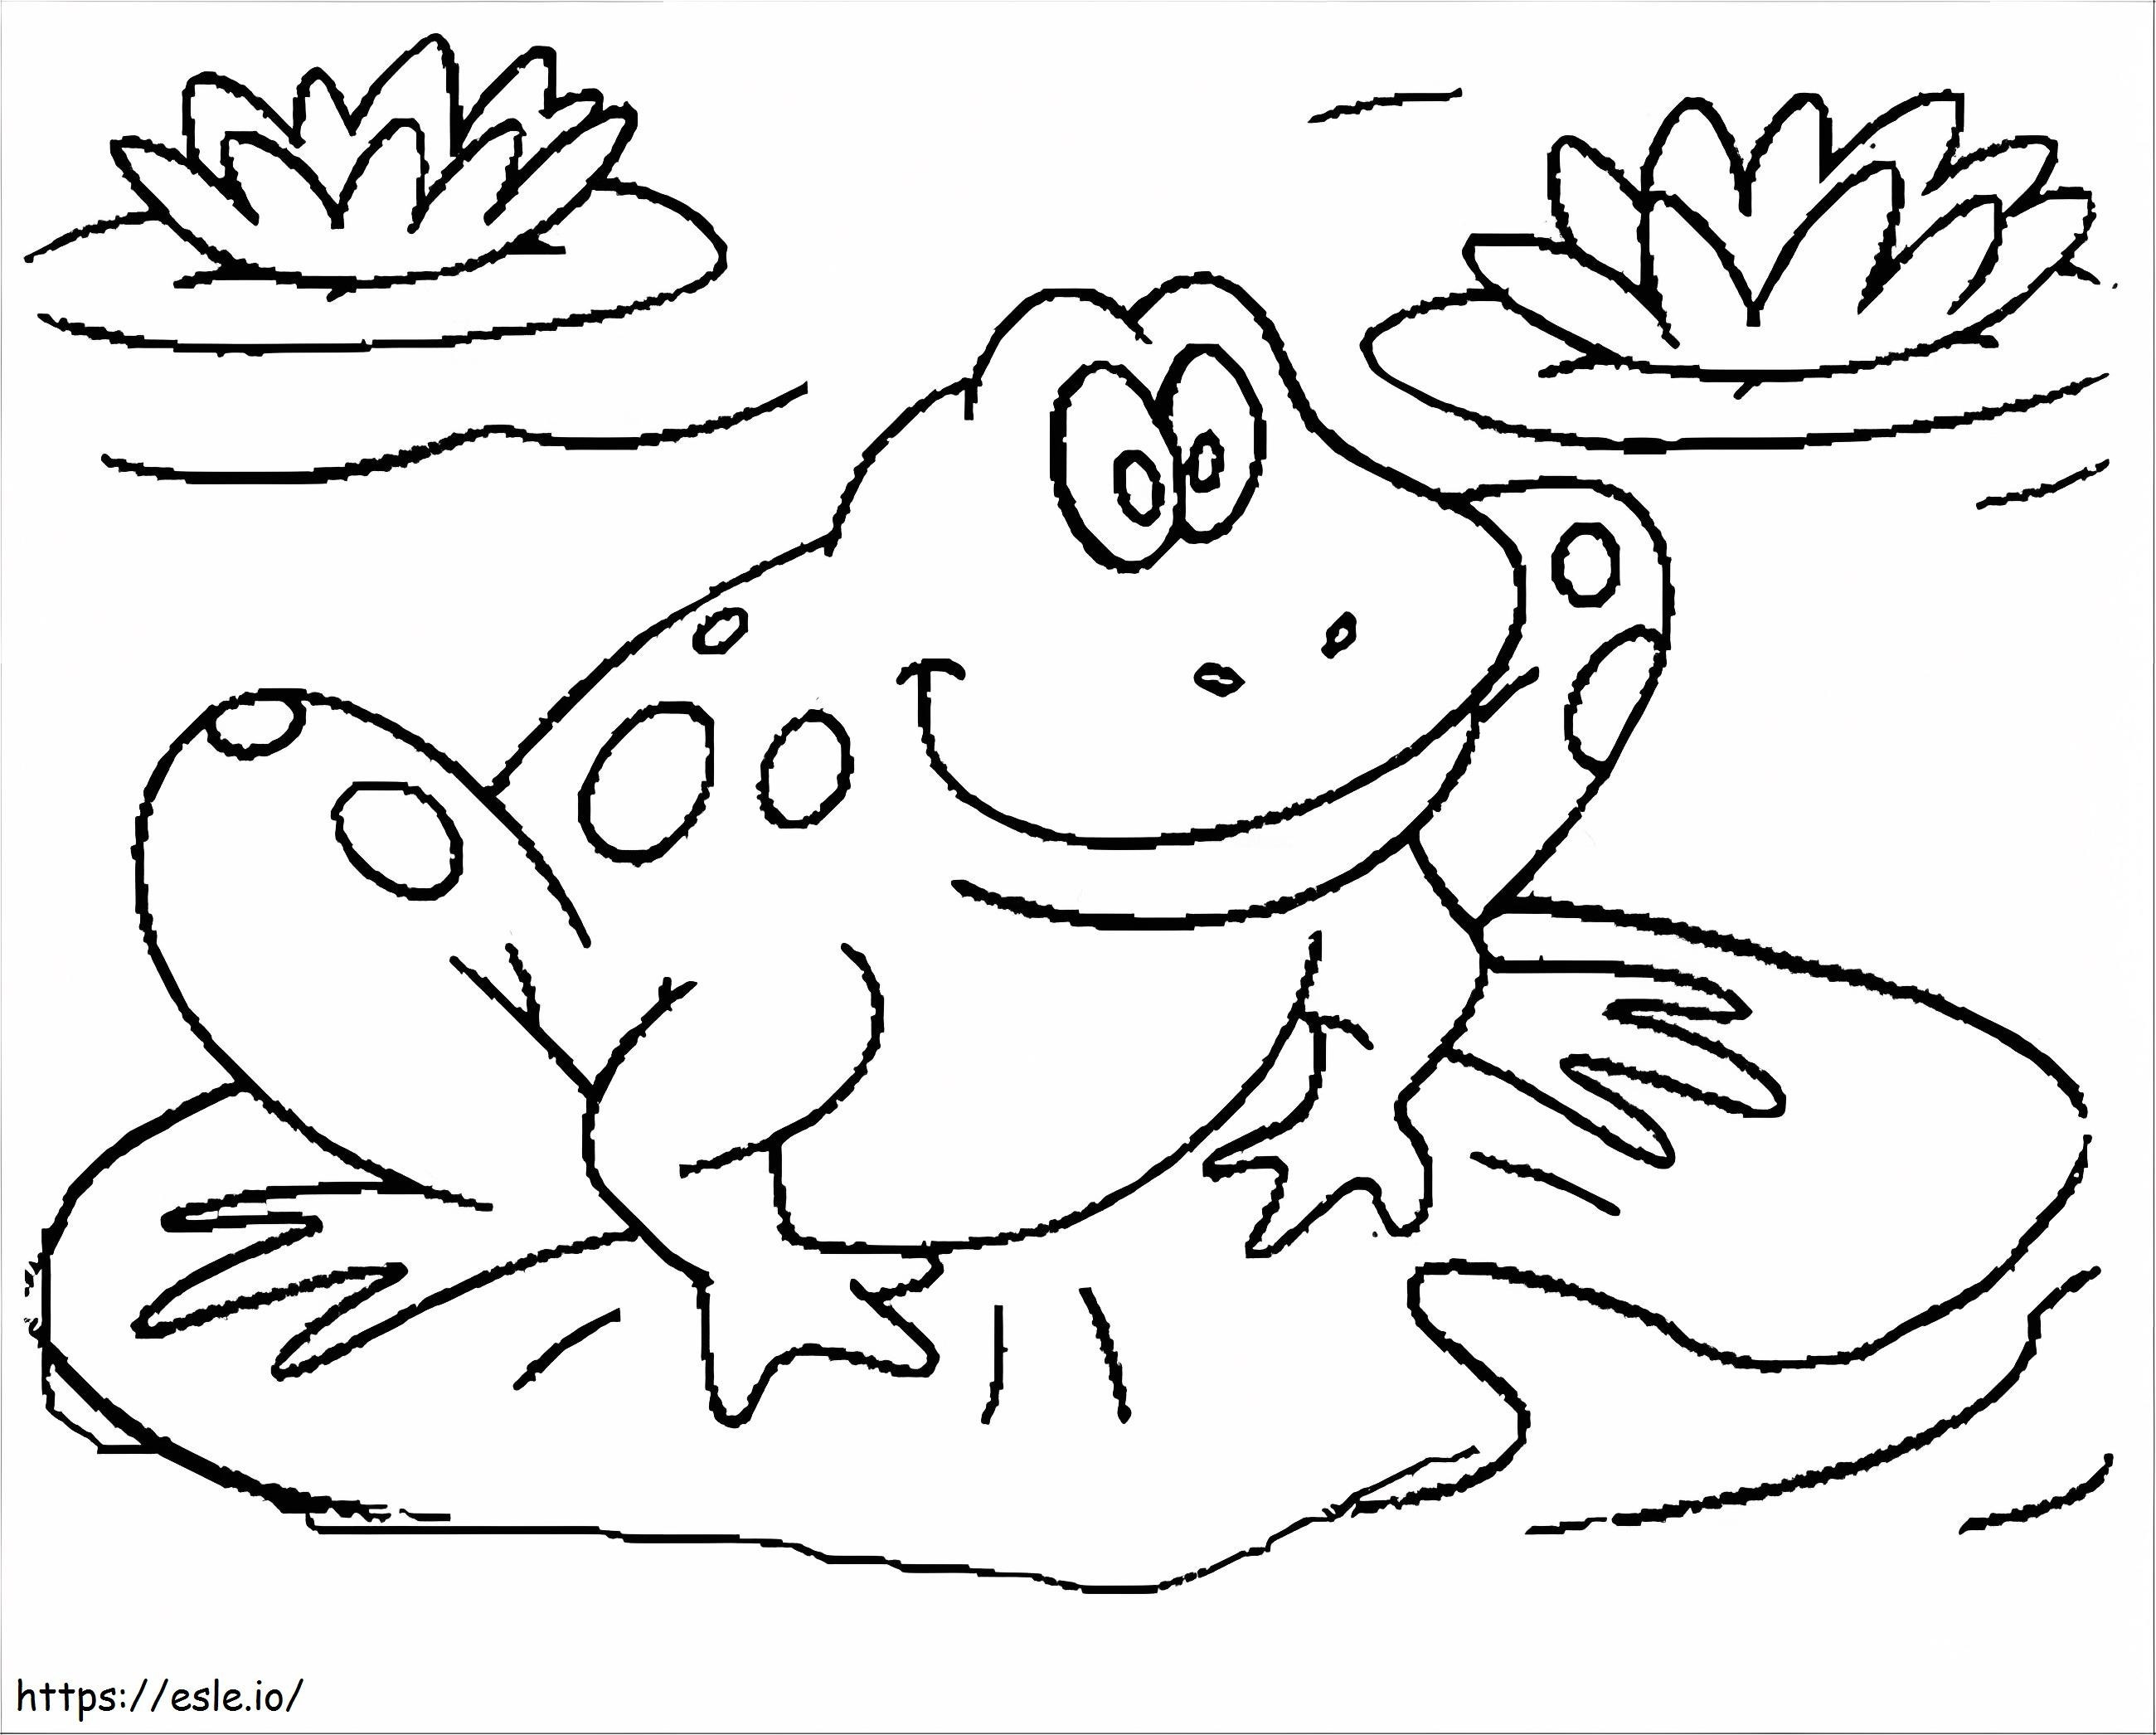 Frog On Smiling Leaf coloring page